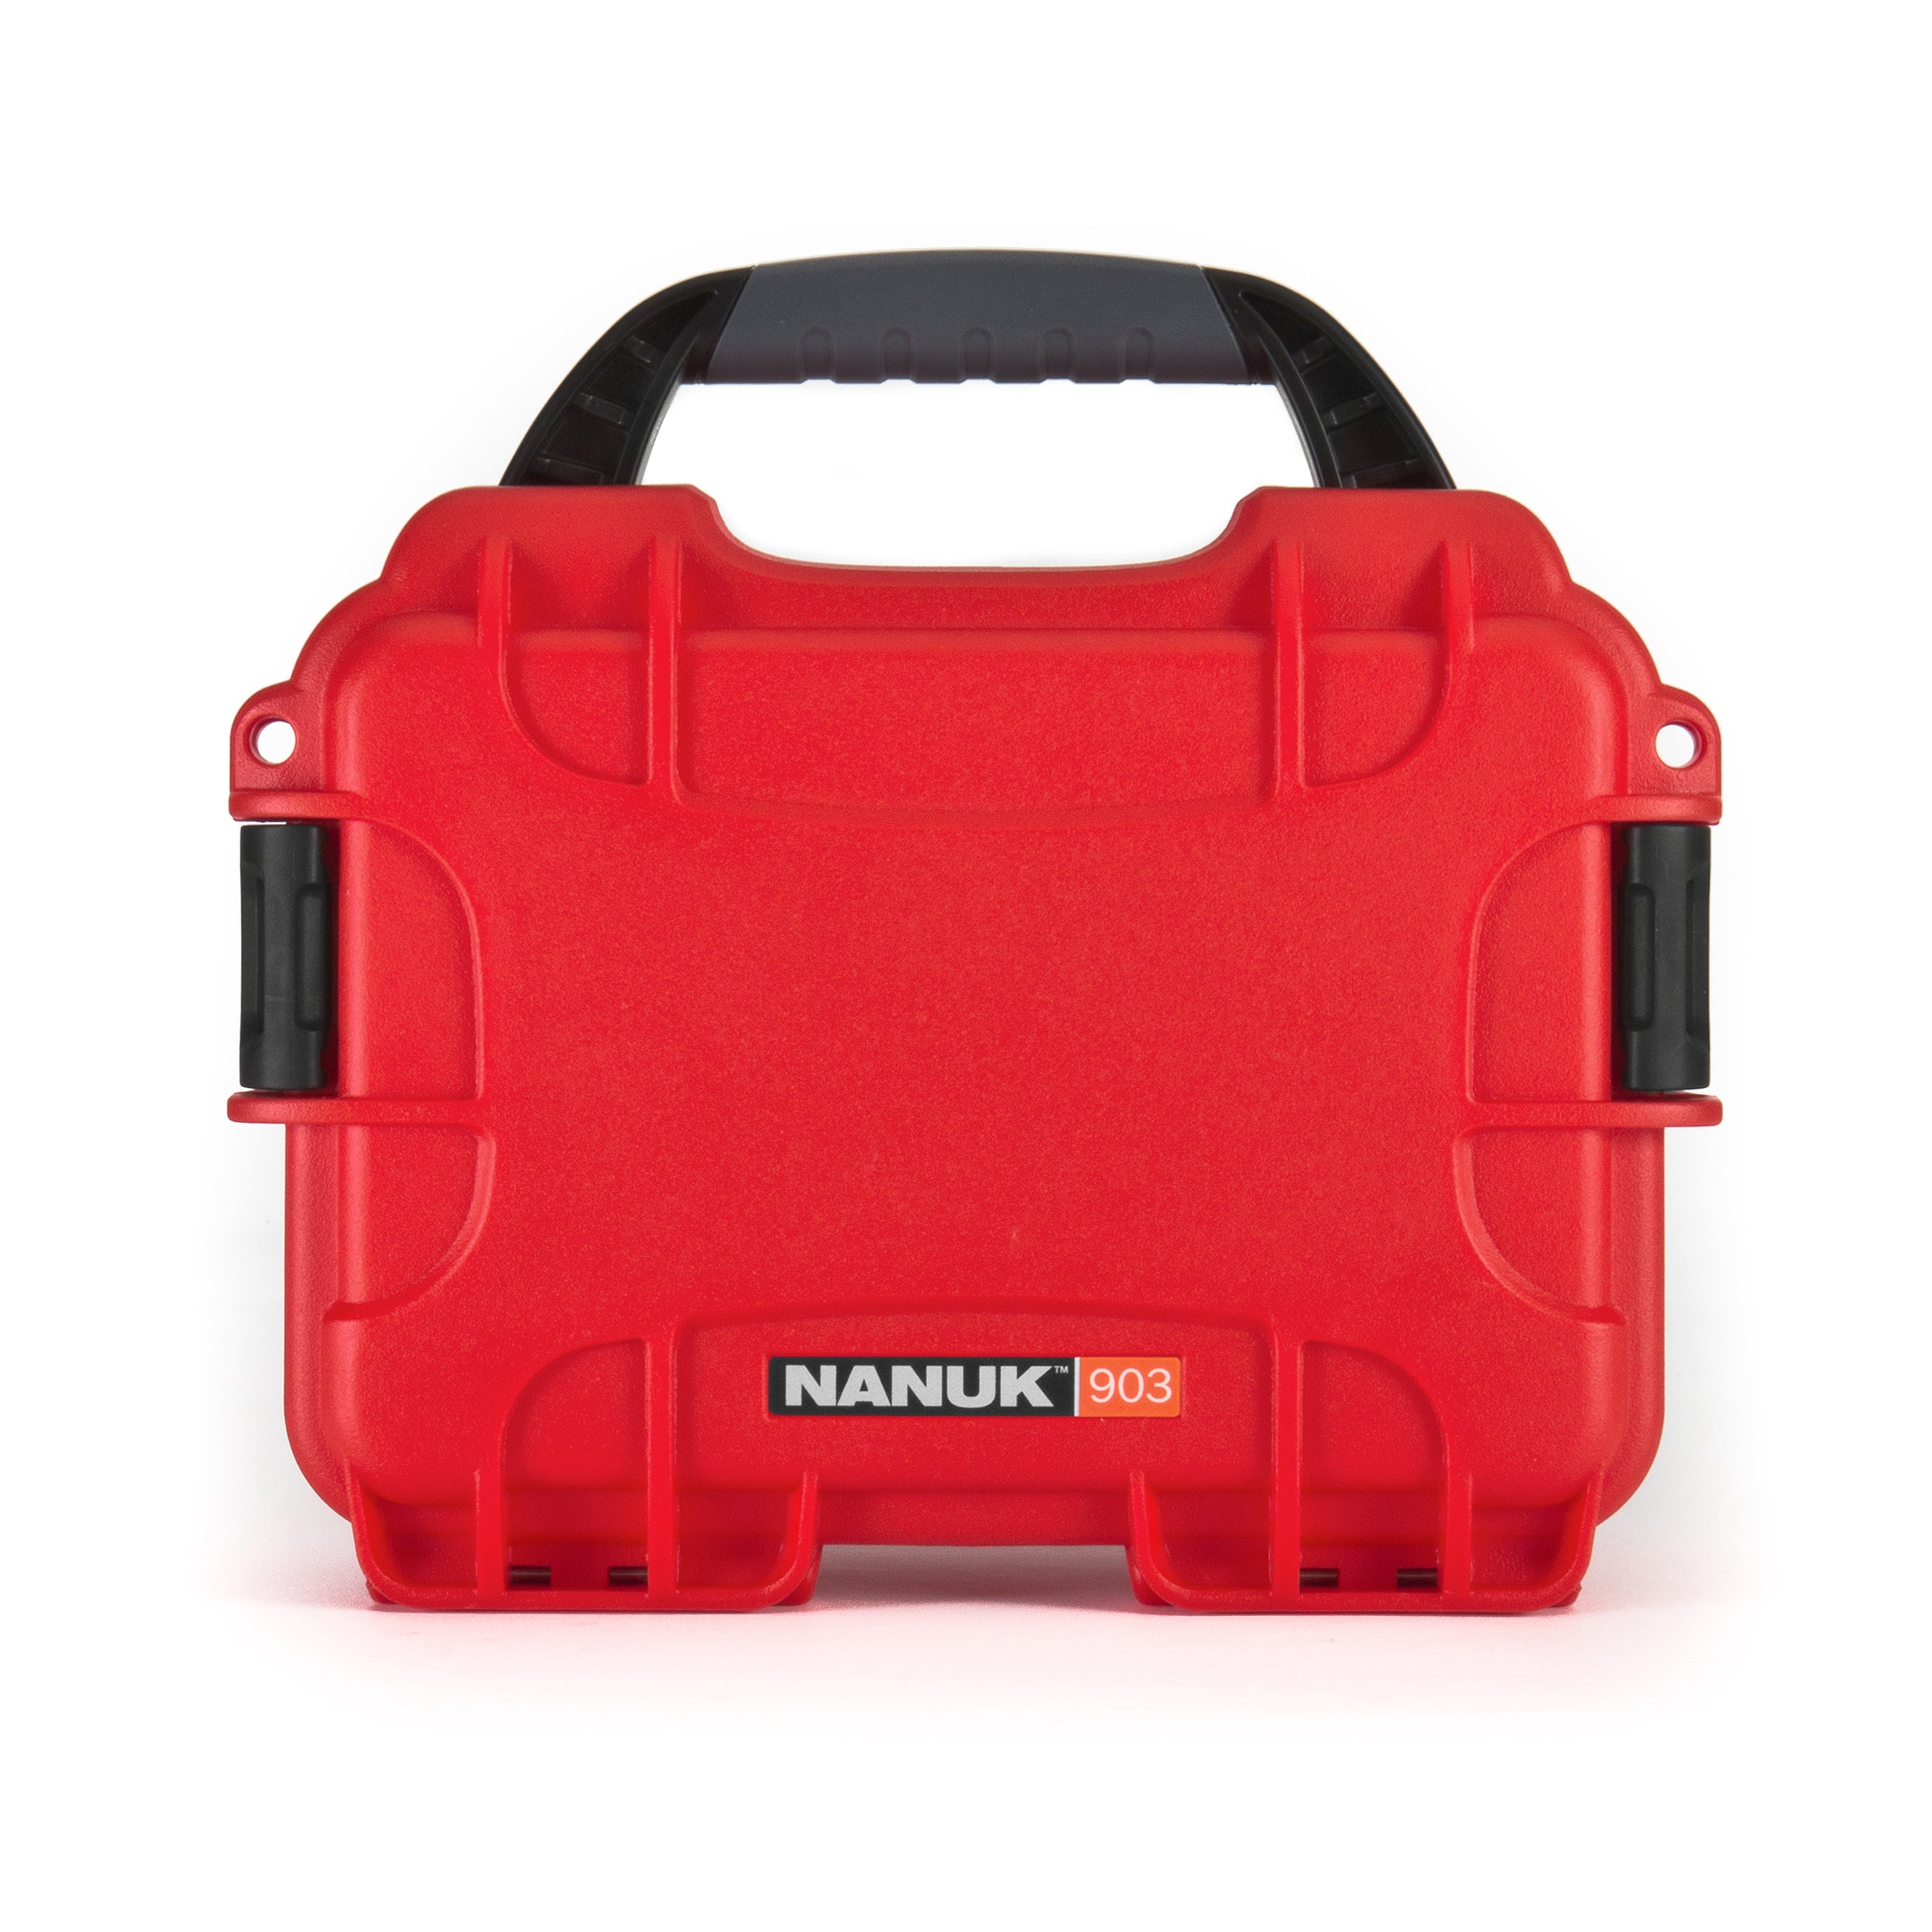 nanuk 903 waterproof hard case red